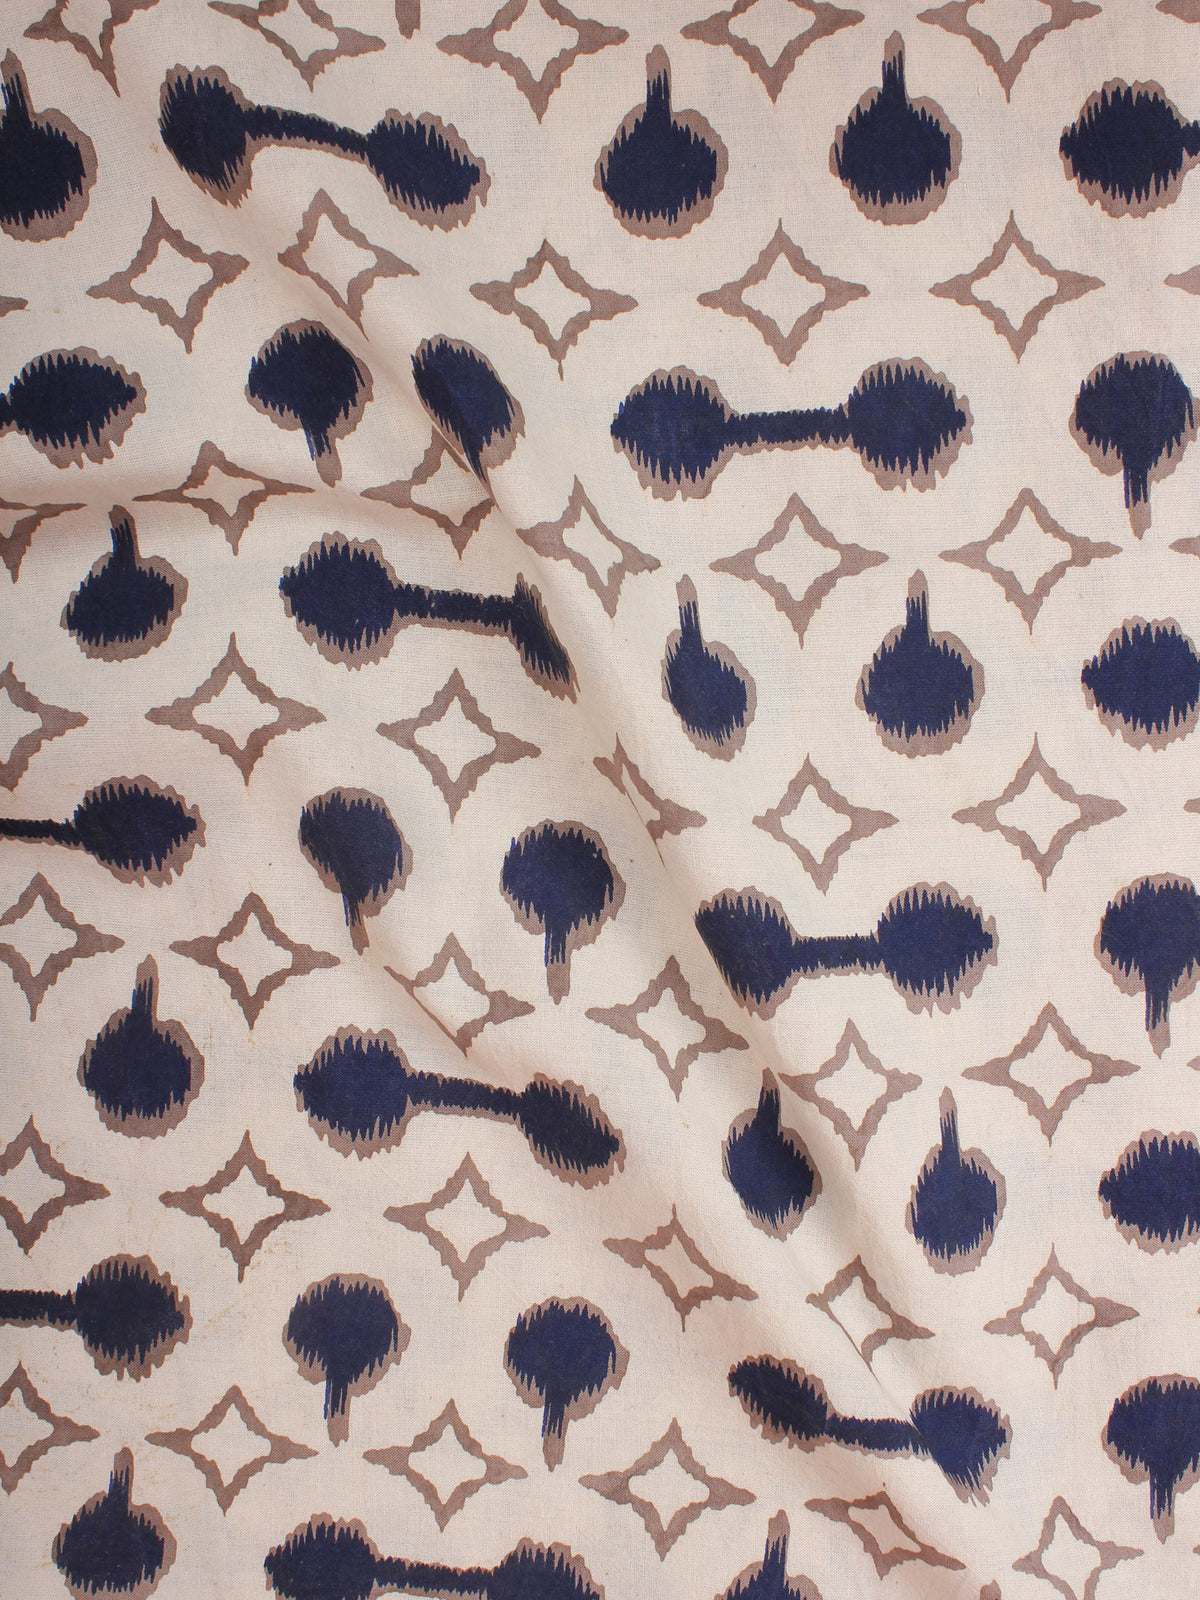 Ivory Indigo Brown Hand Block Printed Cotton Cambric Fabric Per Meter - F0916391